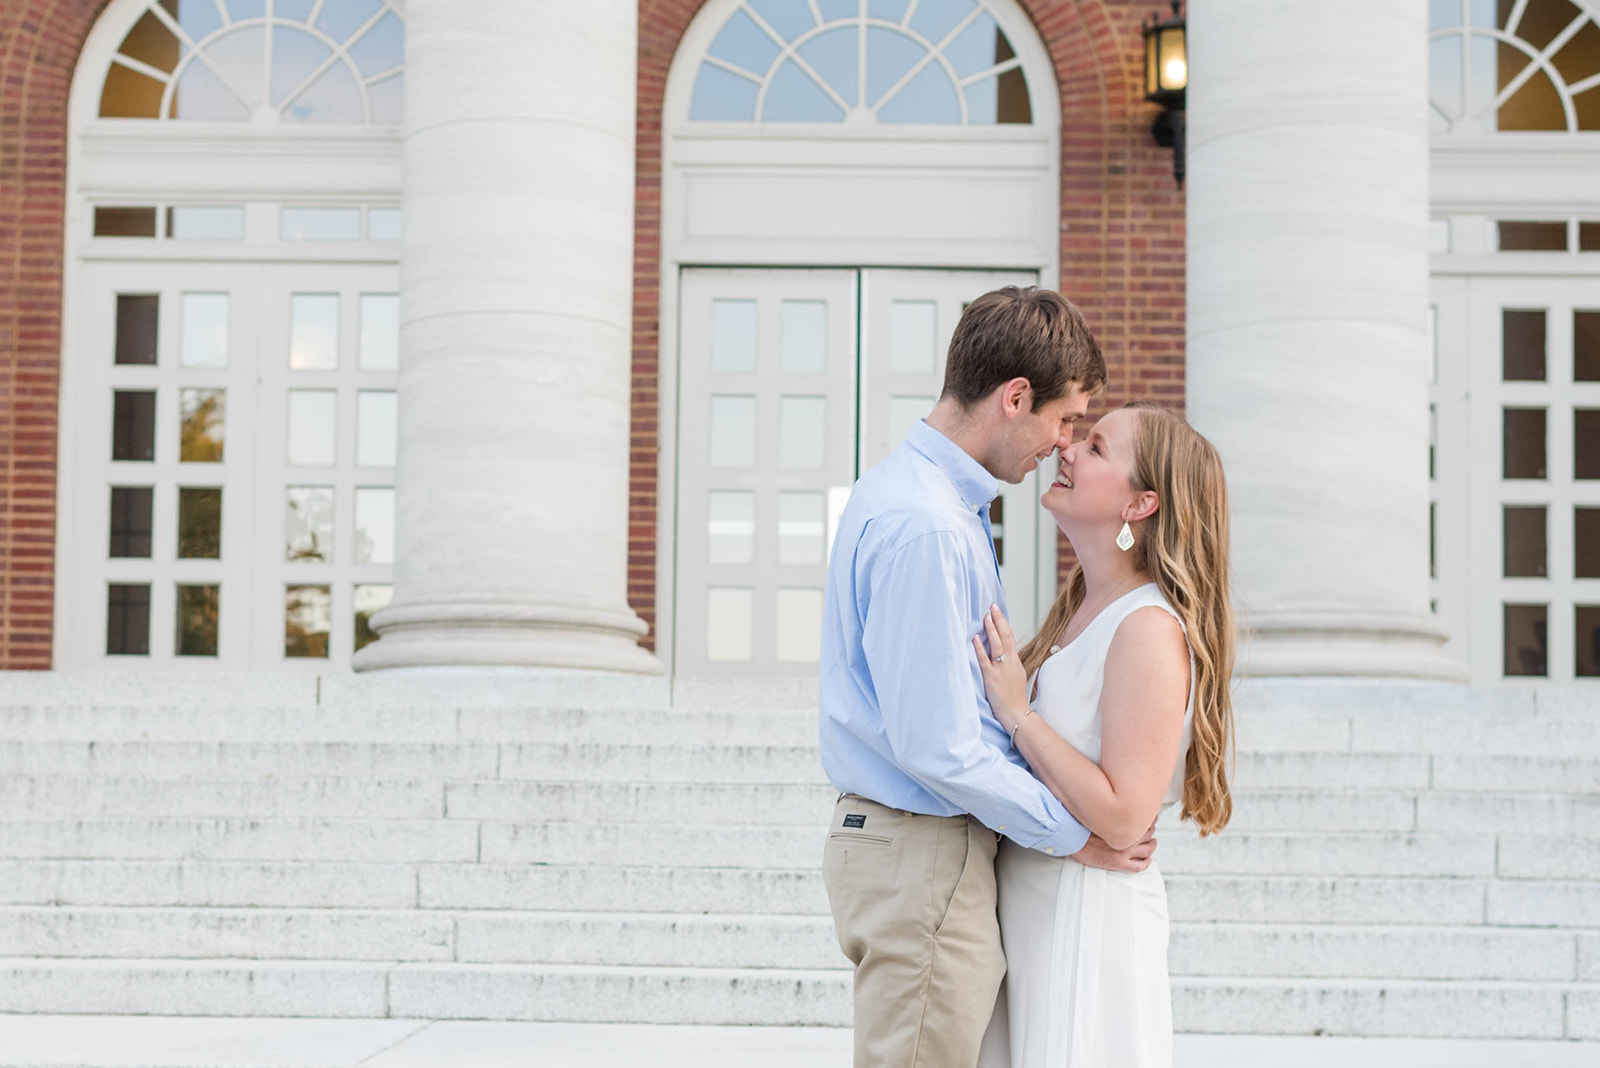 Lauren and Noah Engagement at Vanderbilt University - Nashville, Tennessee - Sweet Williams Photography